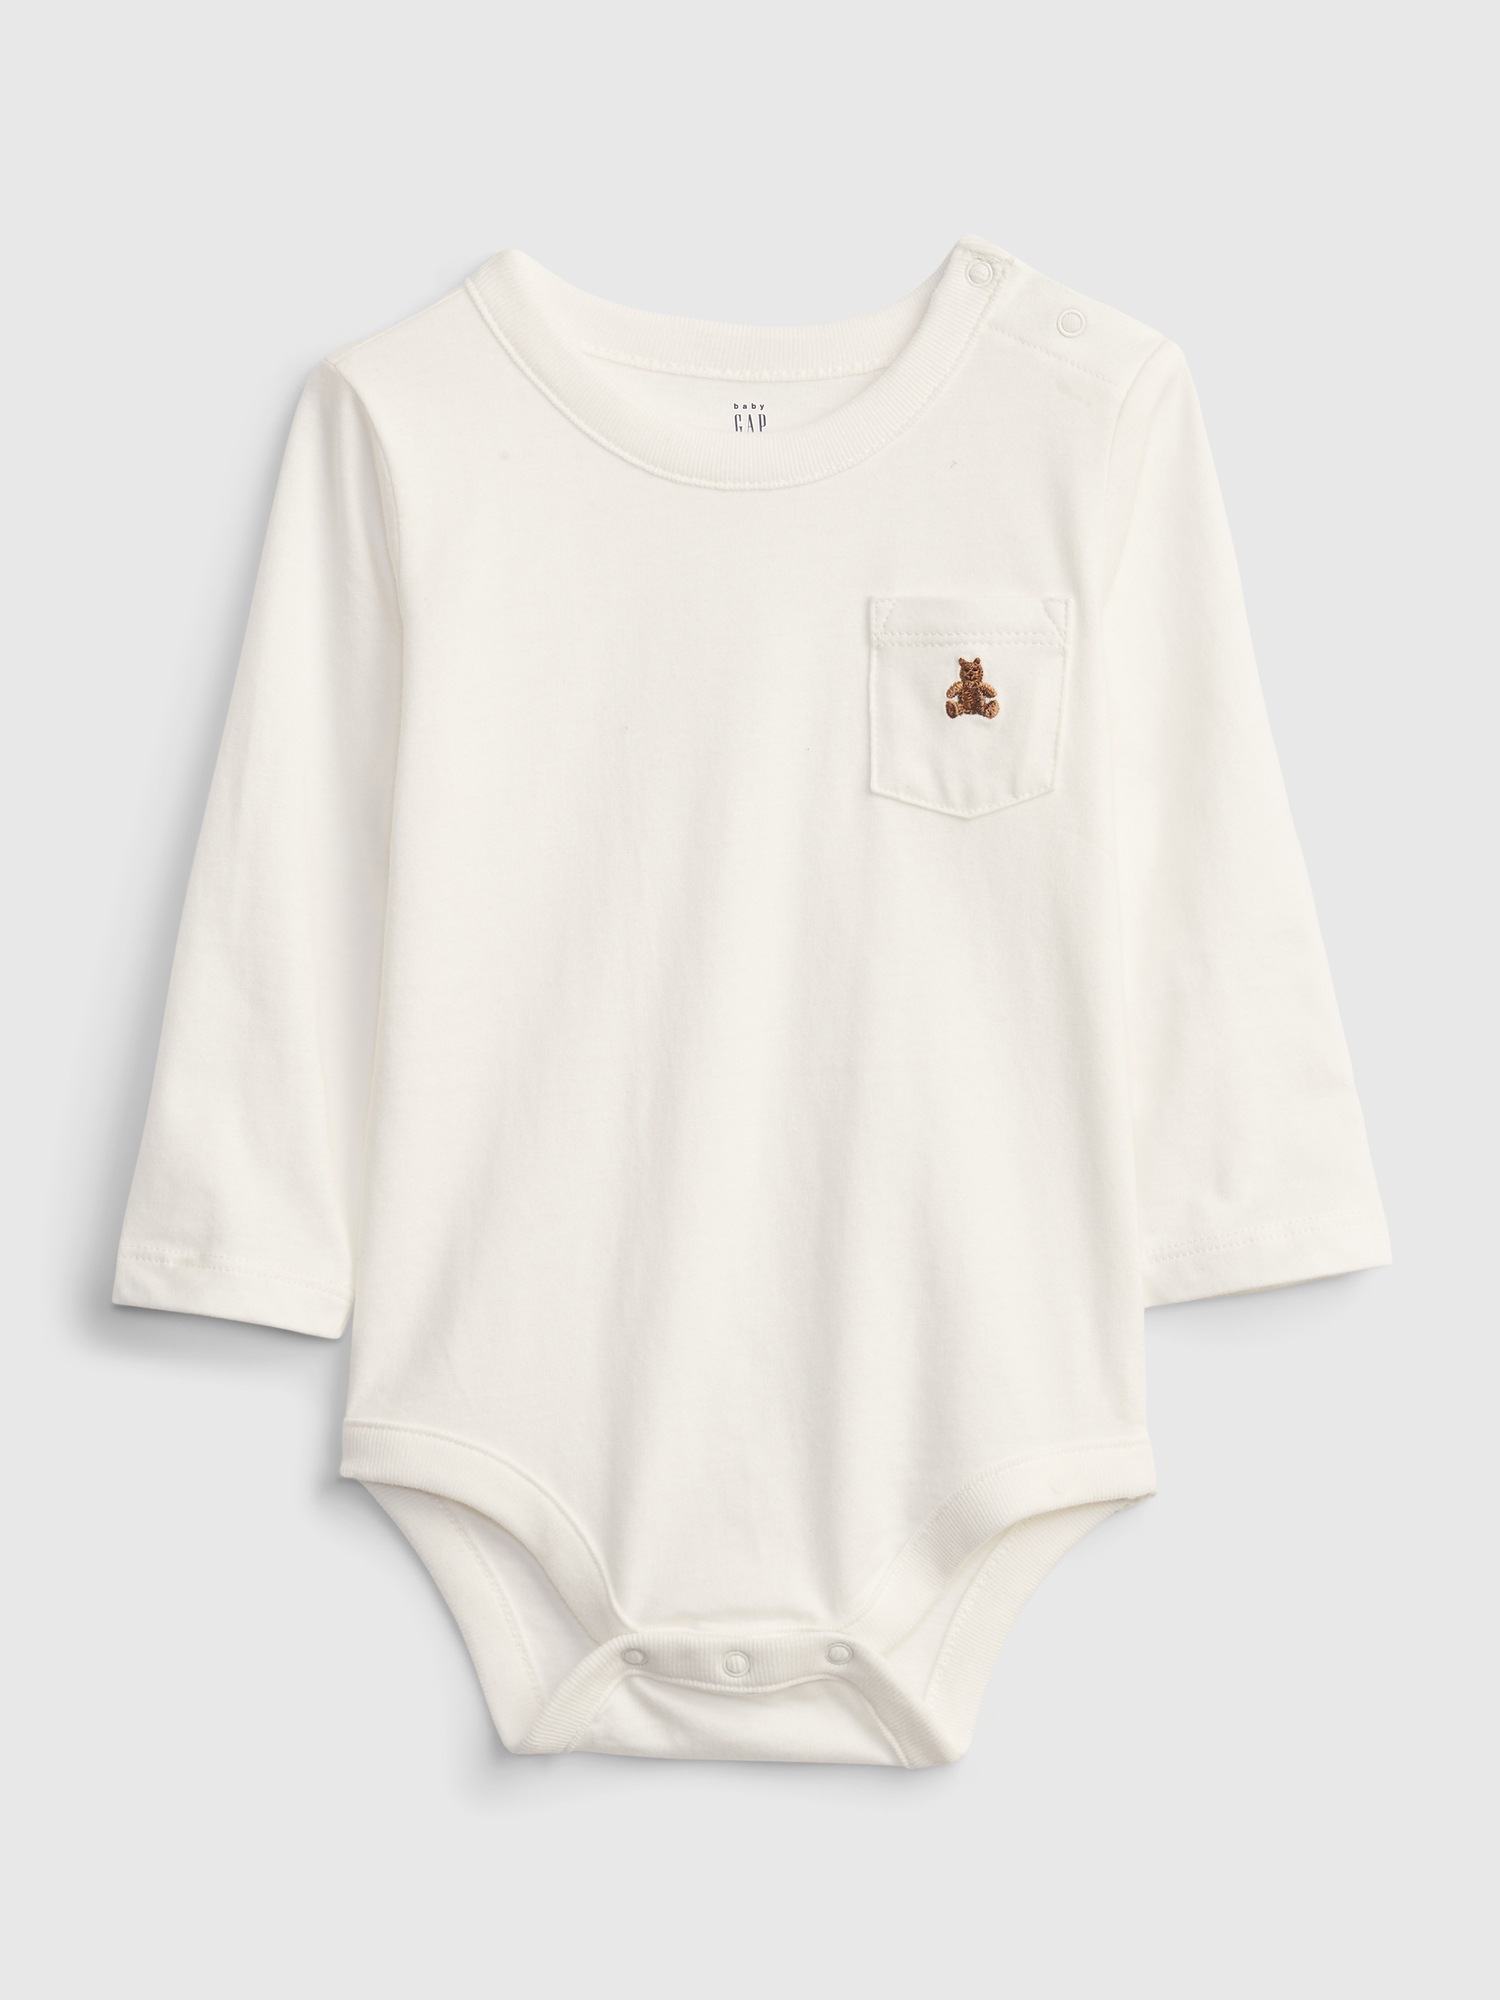 Gap Baby 100% Organic Cotton Mix and Match Bodysuit white. 1